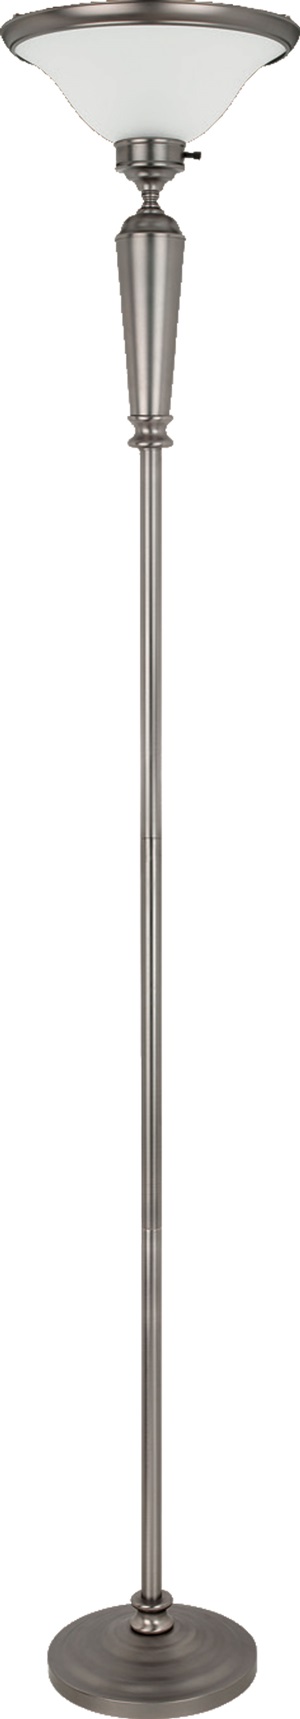 901195 Floor Lamp (Gunmetal)